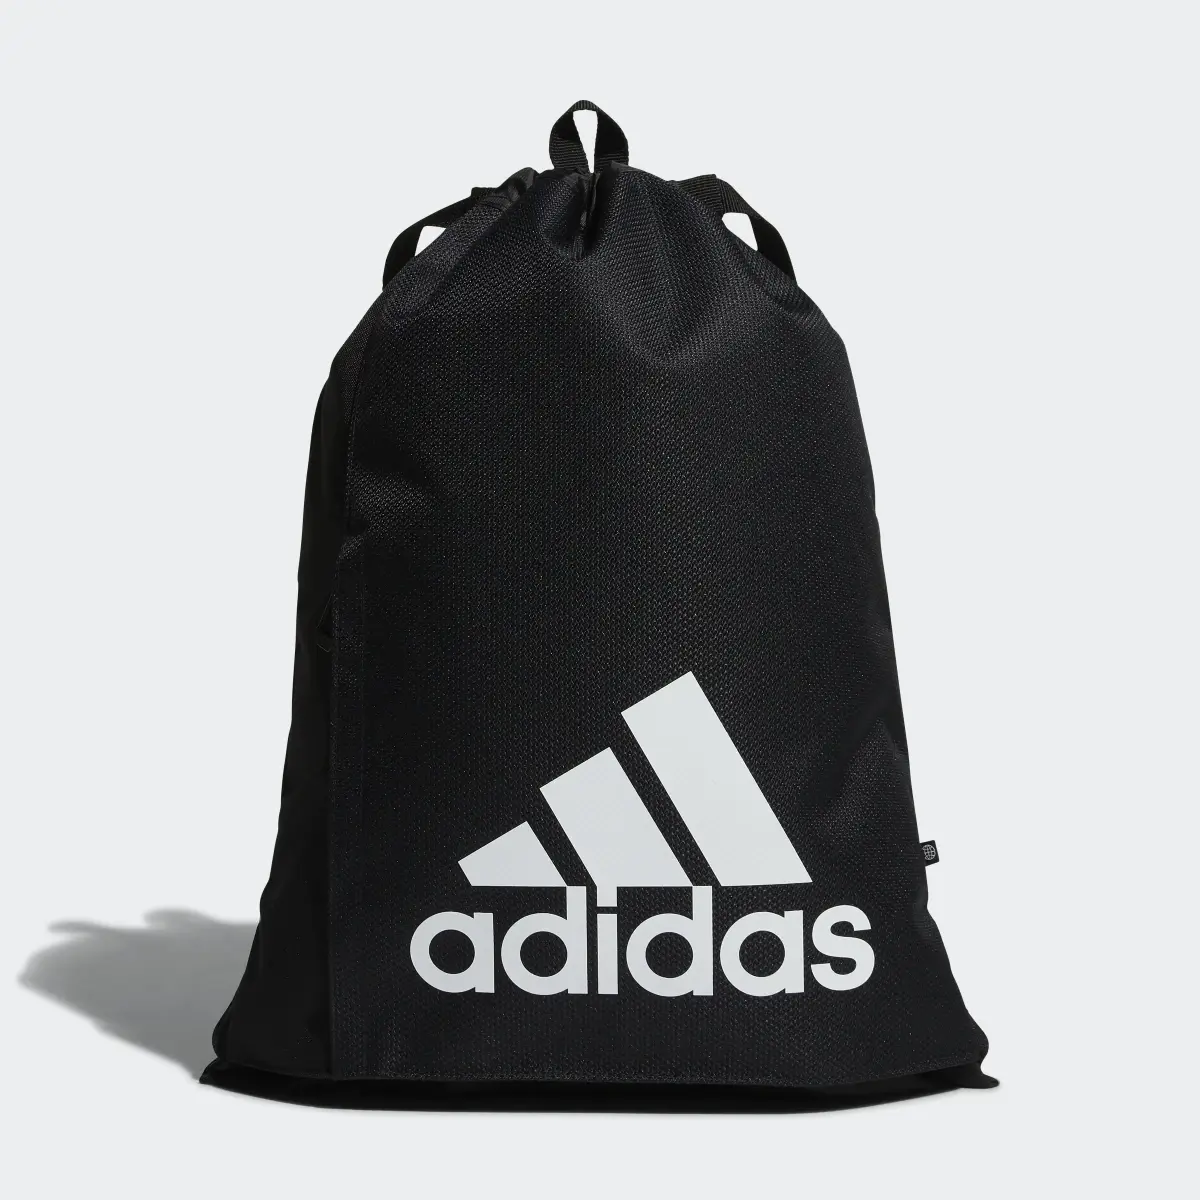 Adidas Optimized Packing System Gym Bag. 2